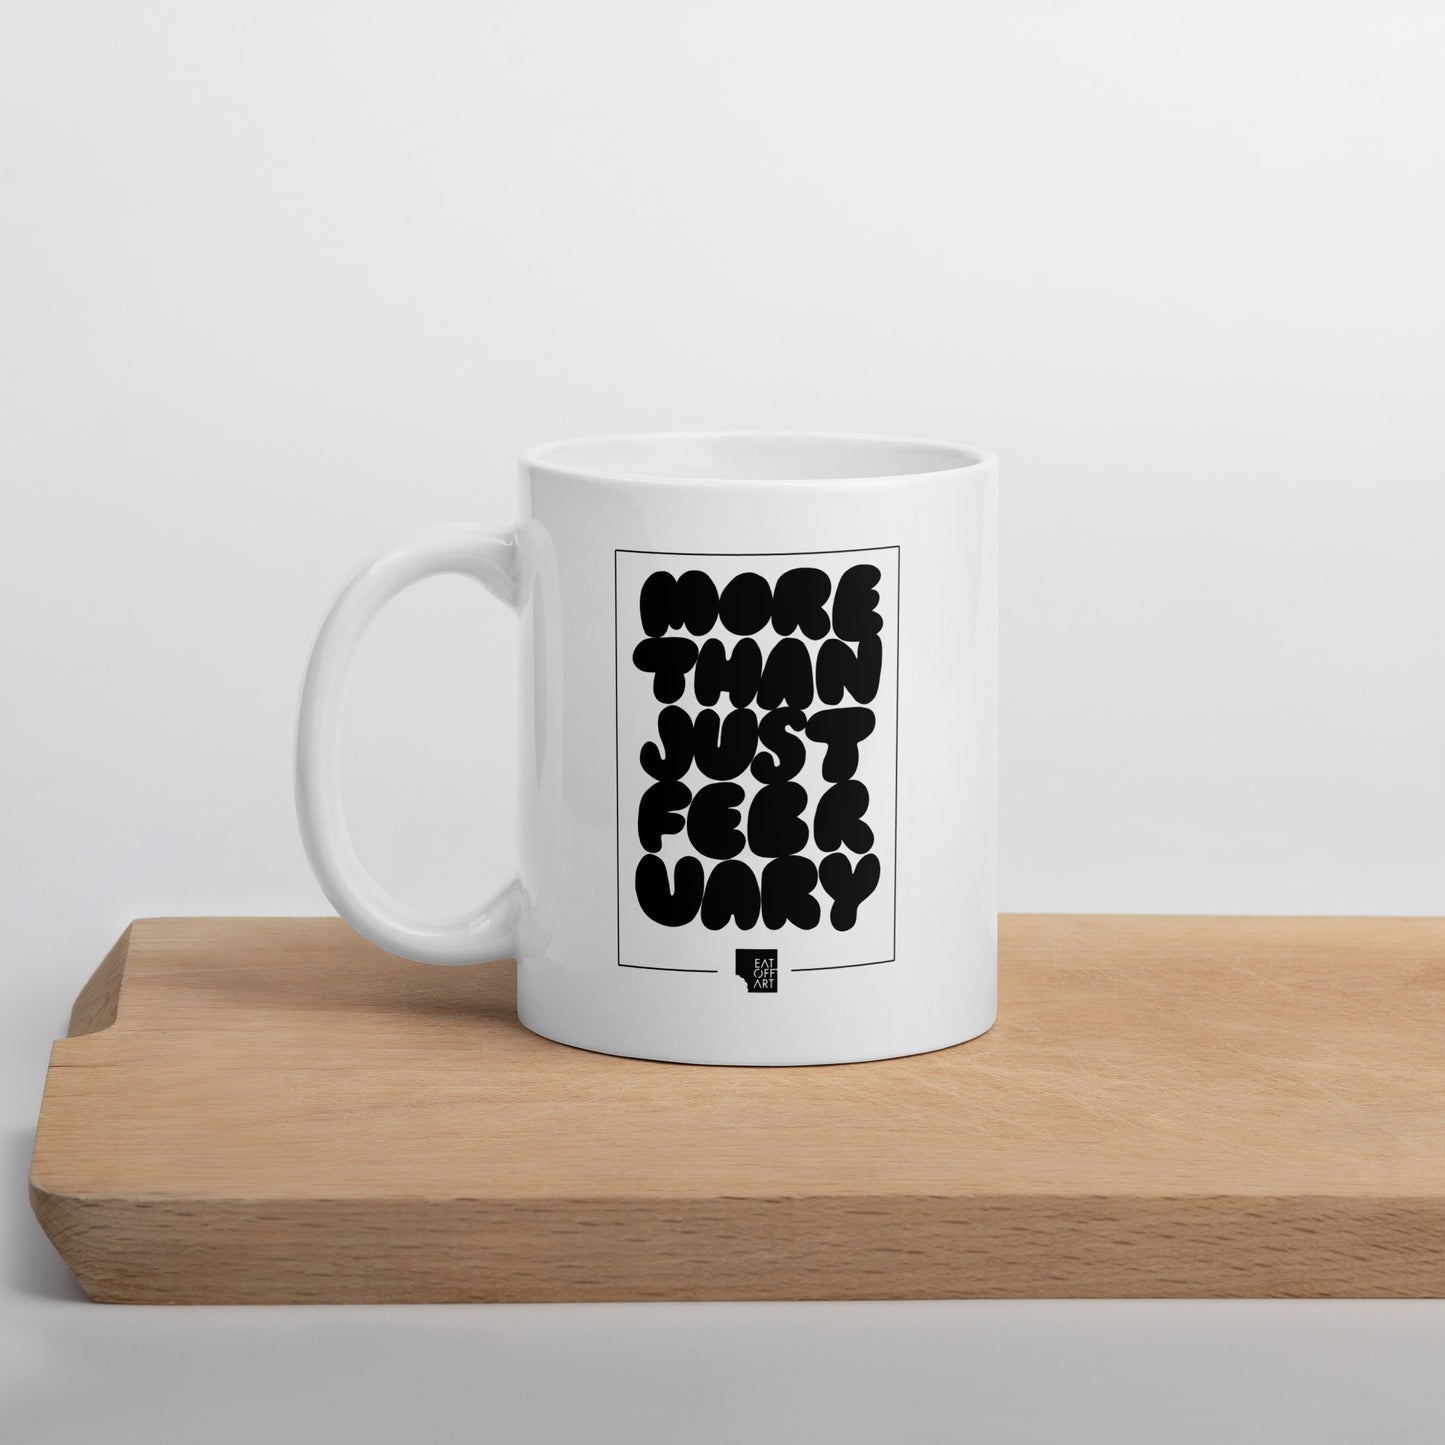 More Than Just February - White glossy mug